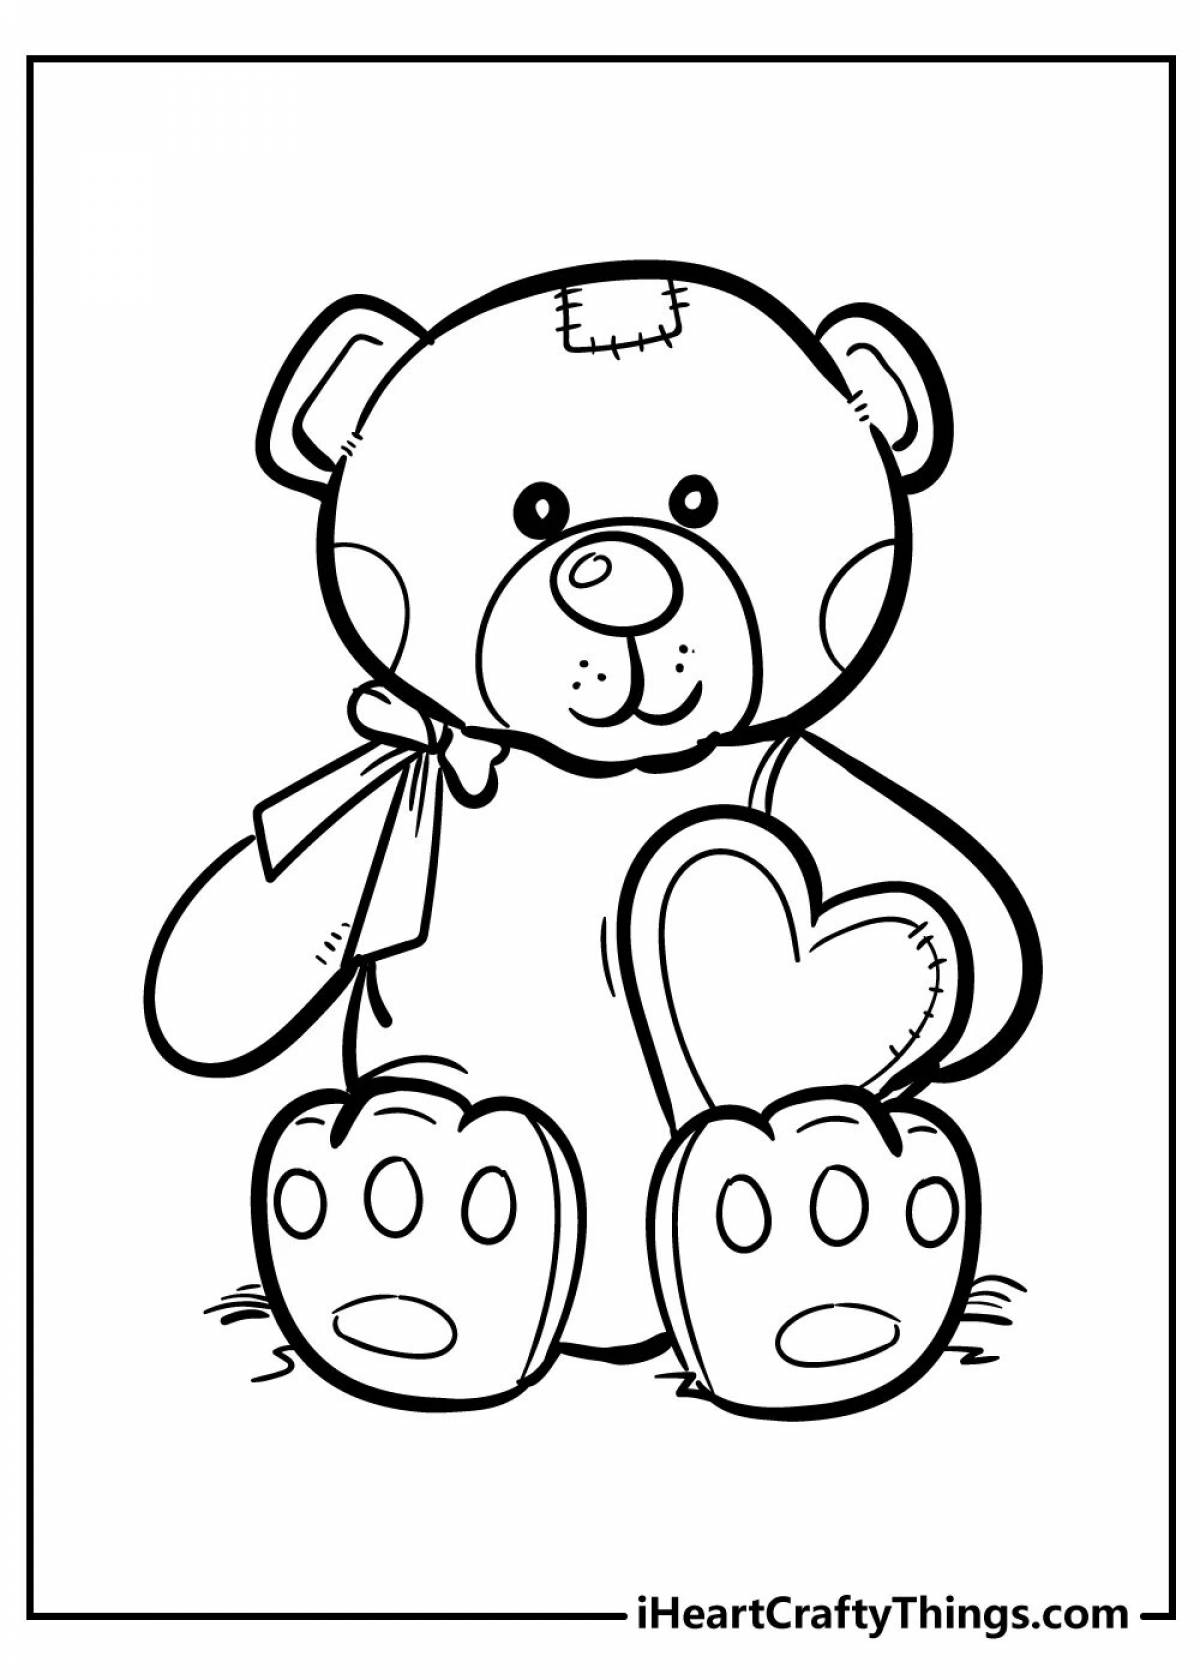 Custom teddy bear coloring page